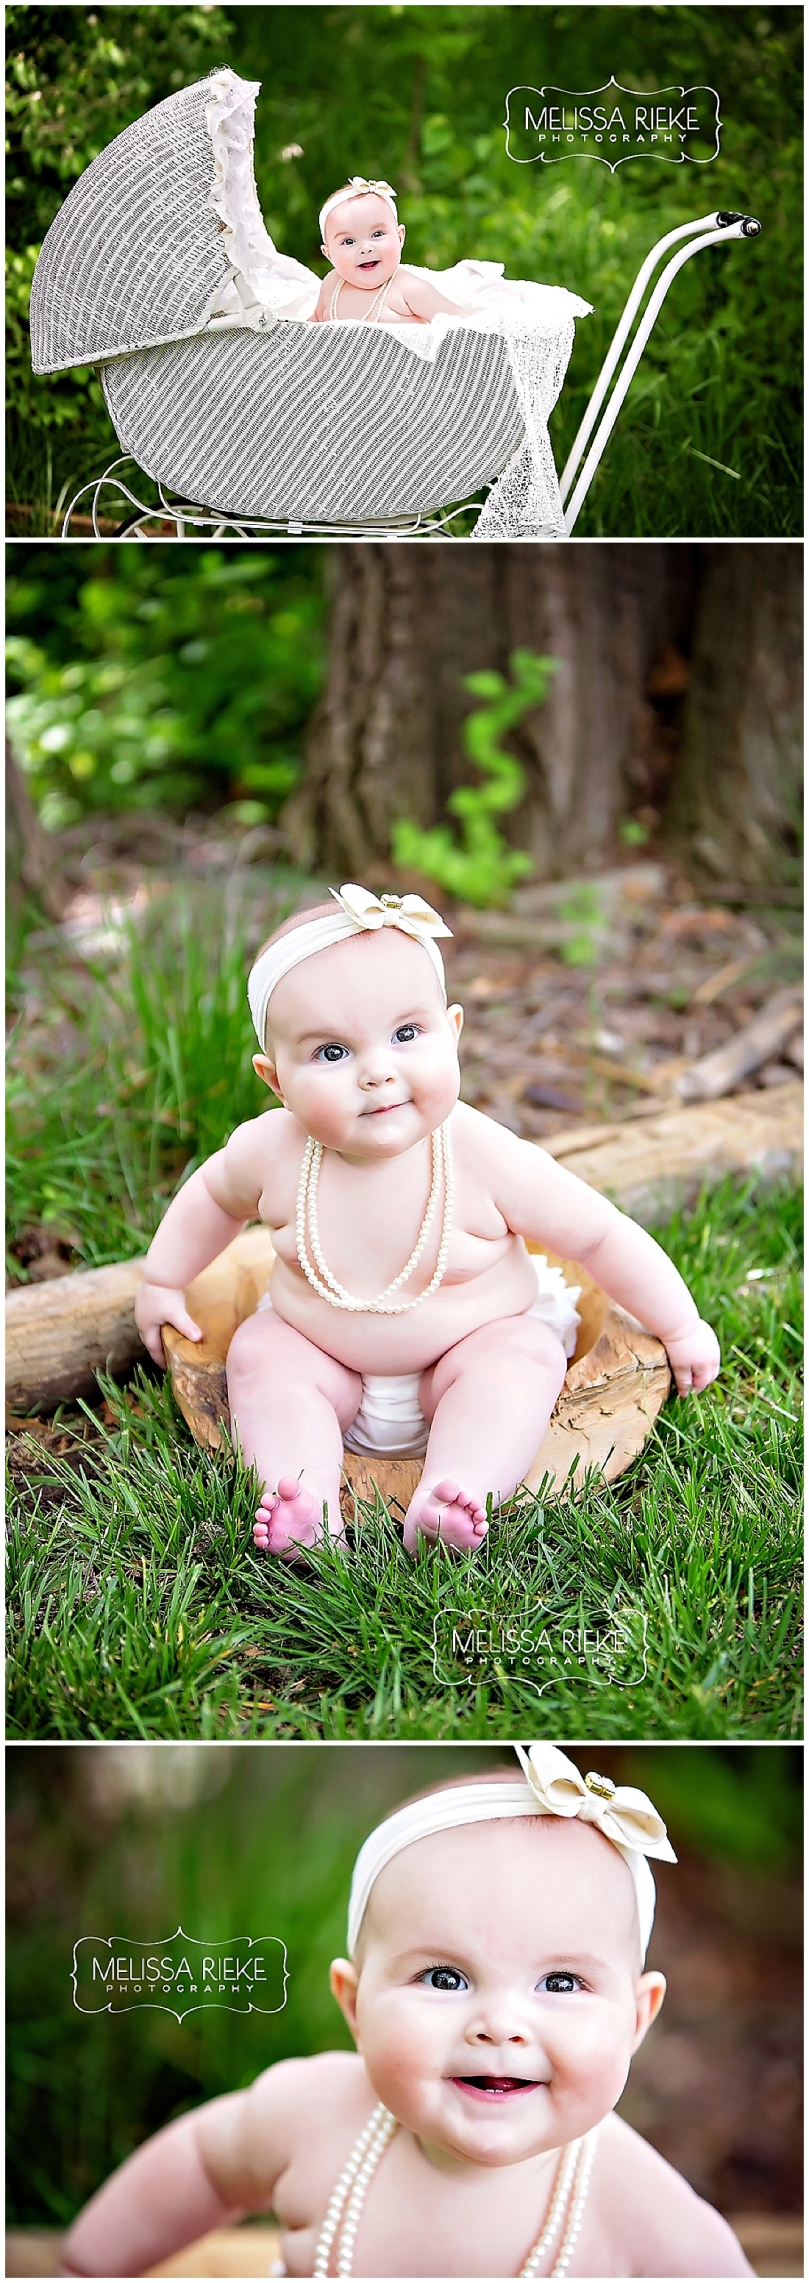 Kansas City Baby Photographer |Melissa Rieke Photography www.melissariekephotography.com